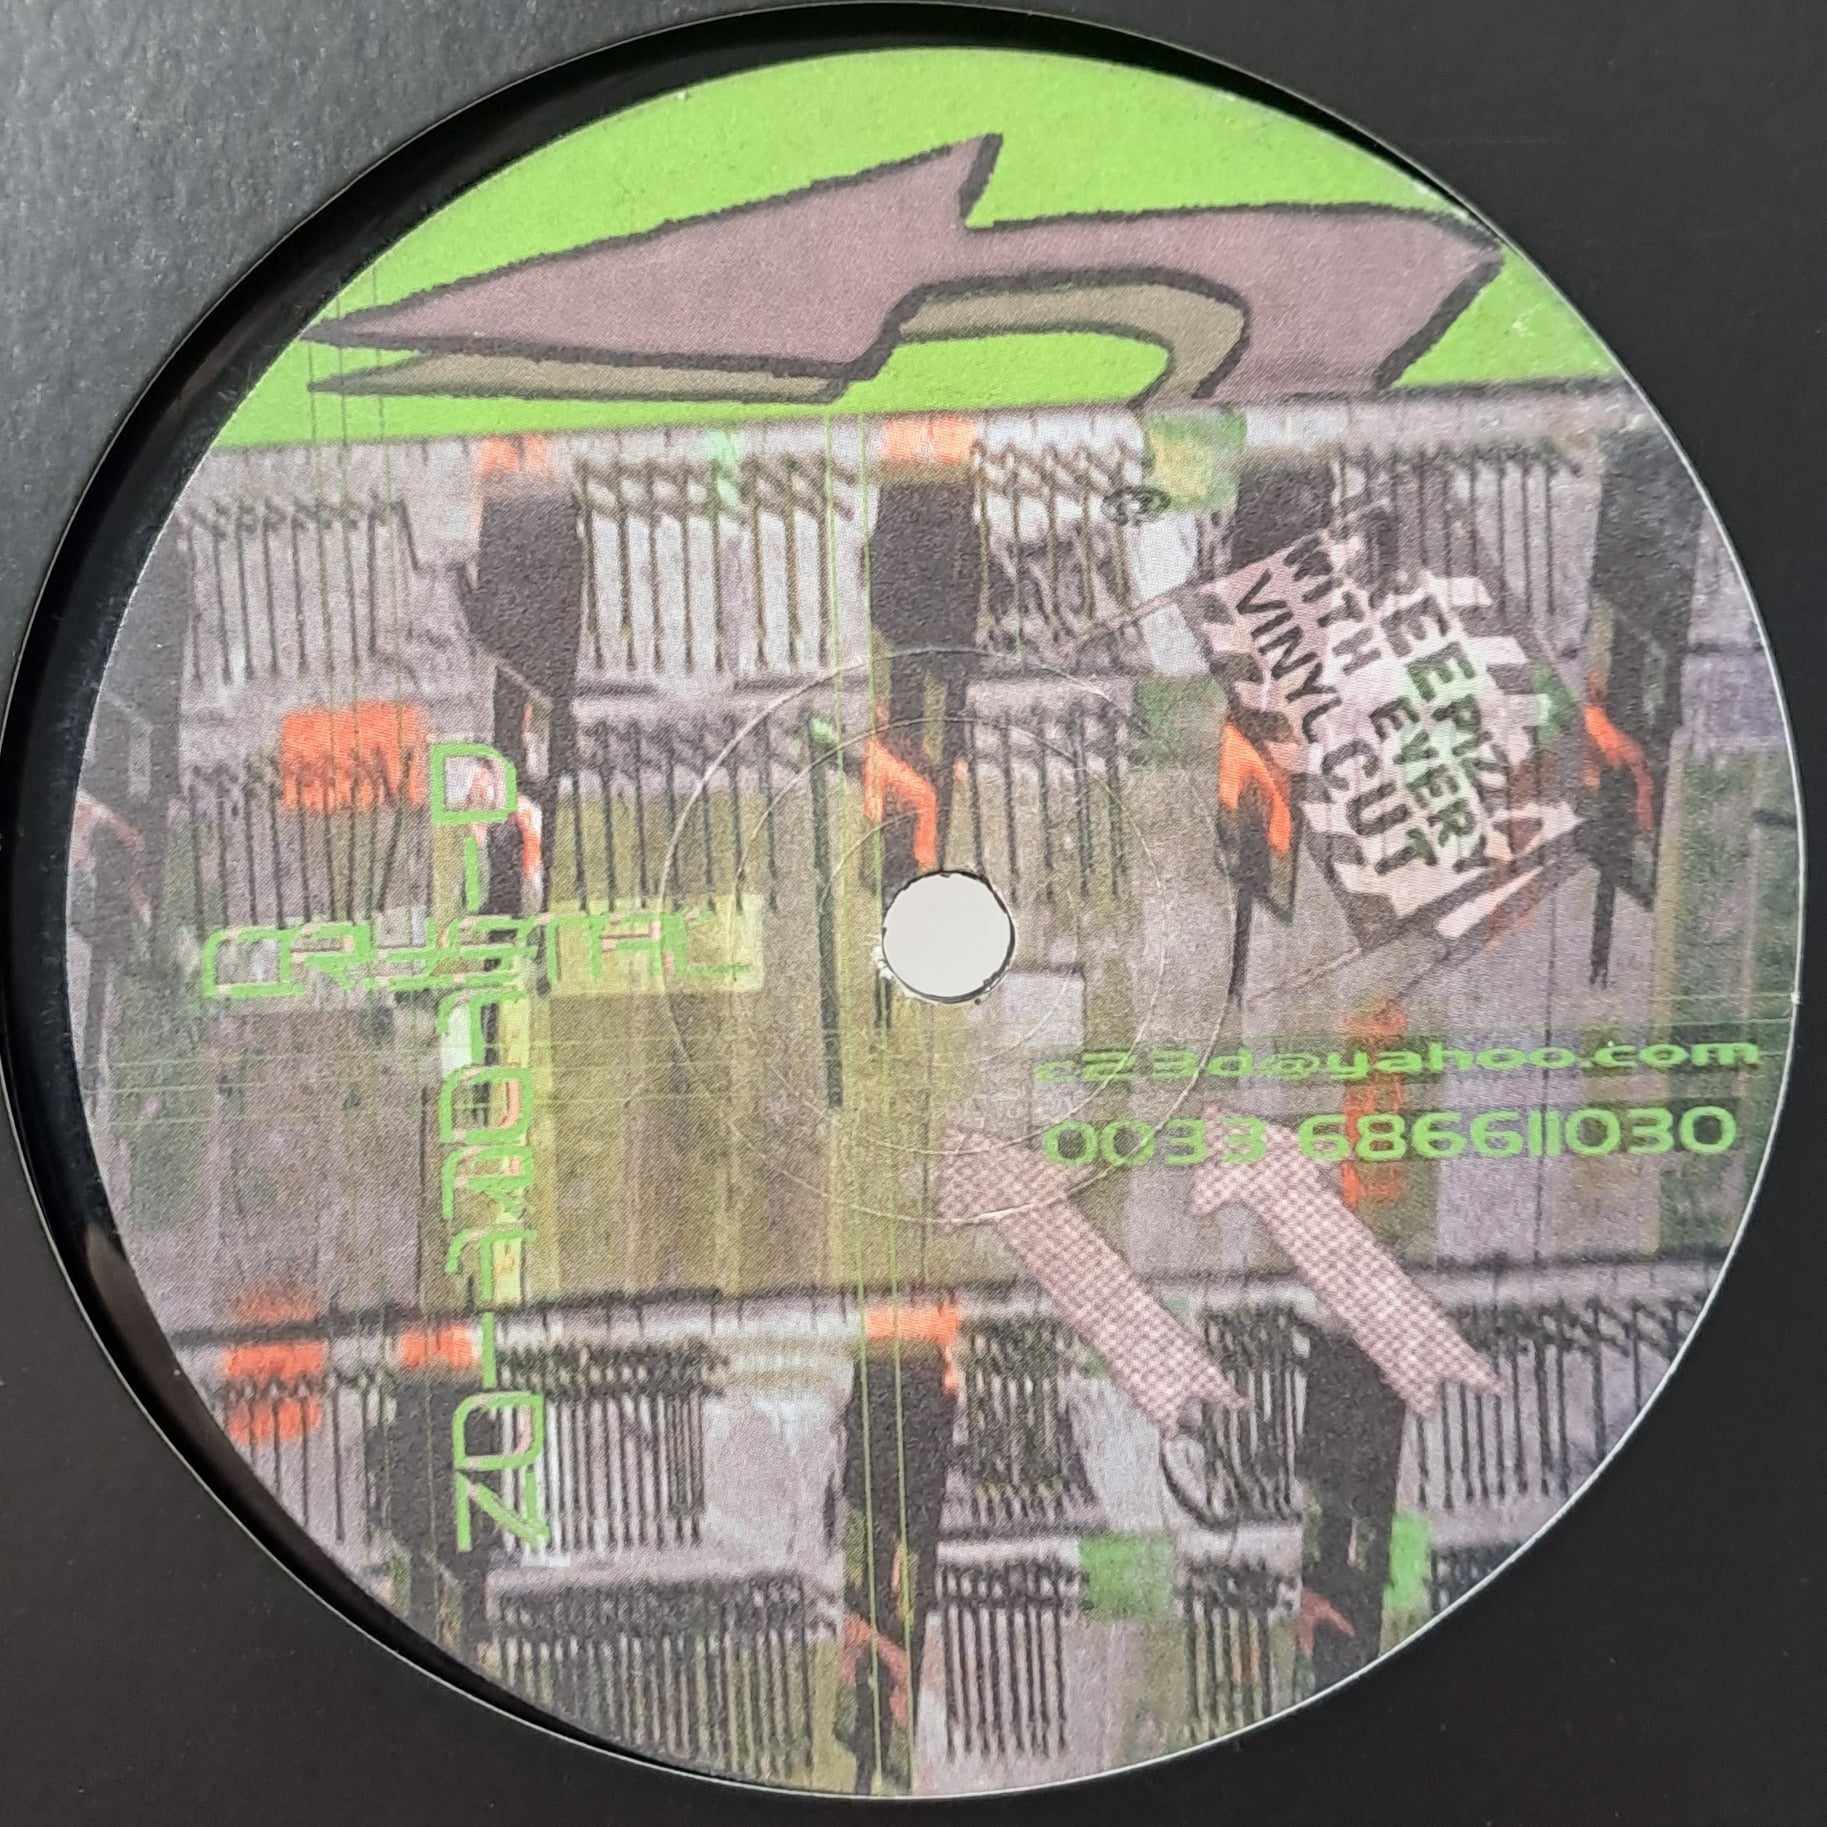 LaBrat Audiochemicals (CD EP2) - vinyle Breakbeat
